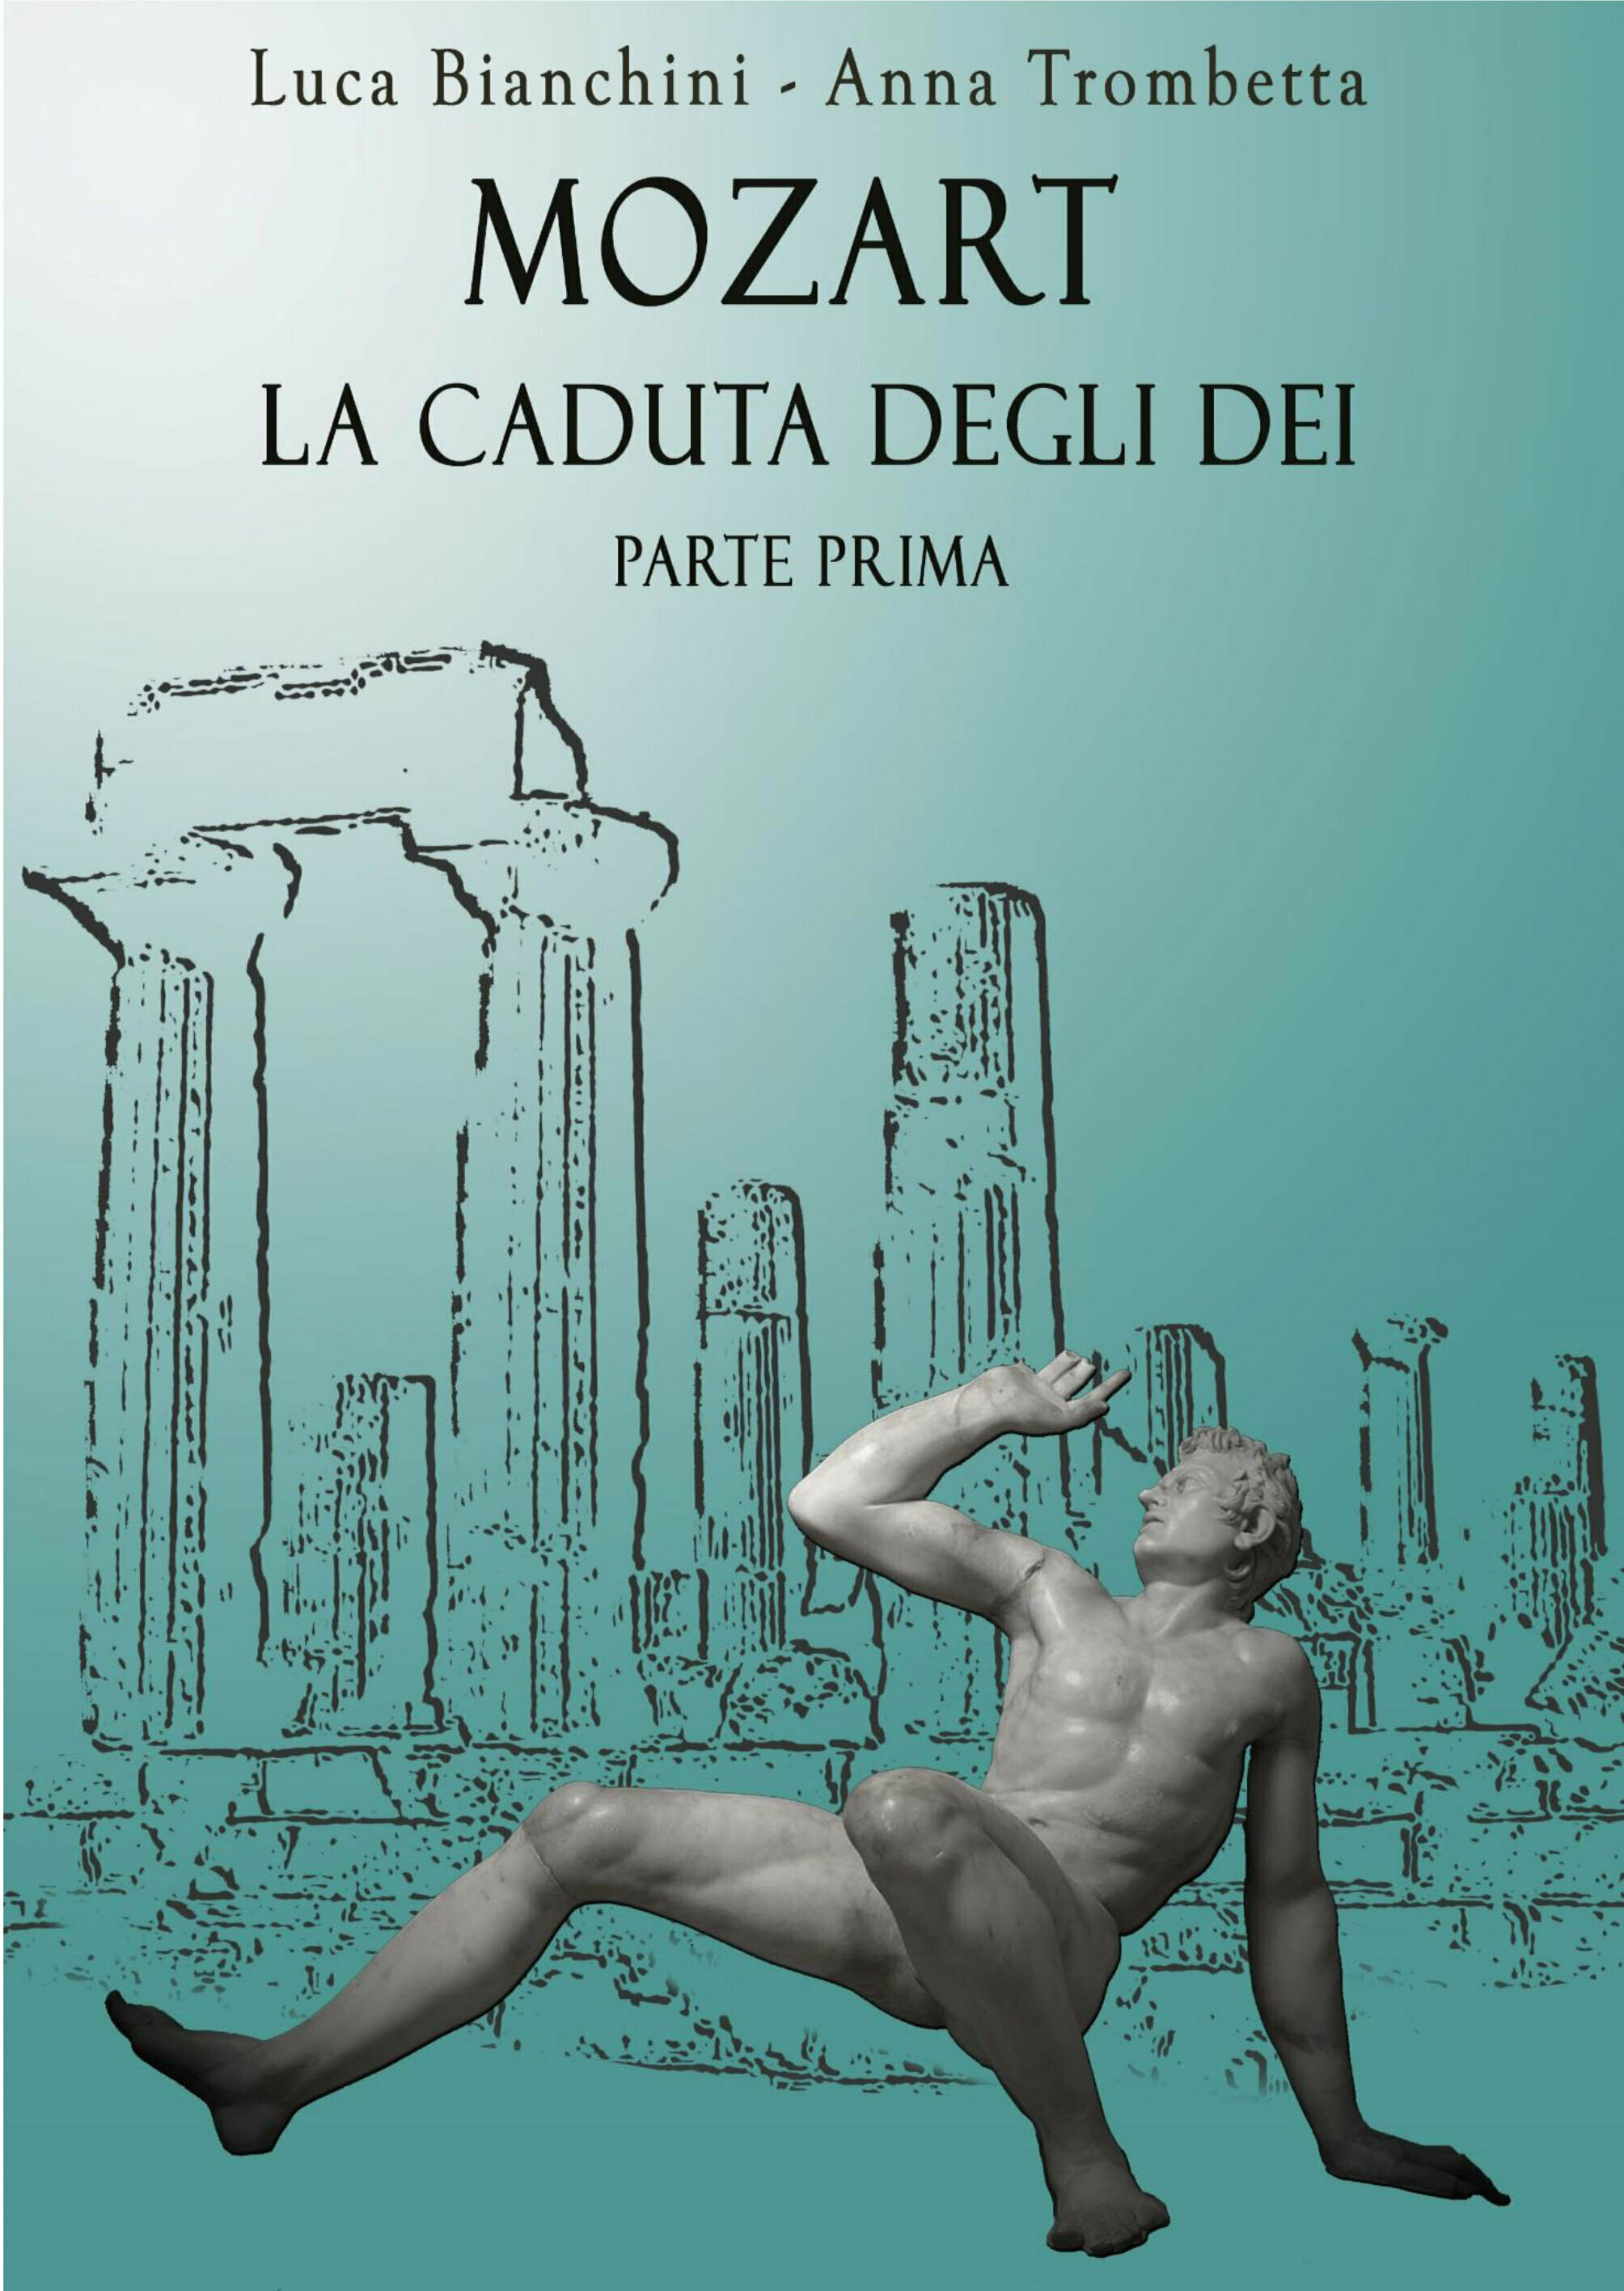 Luca Bianchini & Anna Trombetta: Fall of the Gods <br/></noscript><img 
 class=